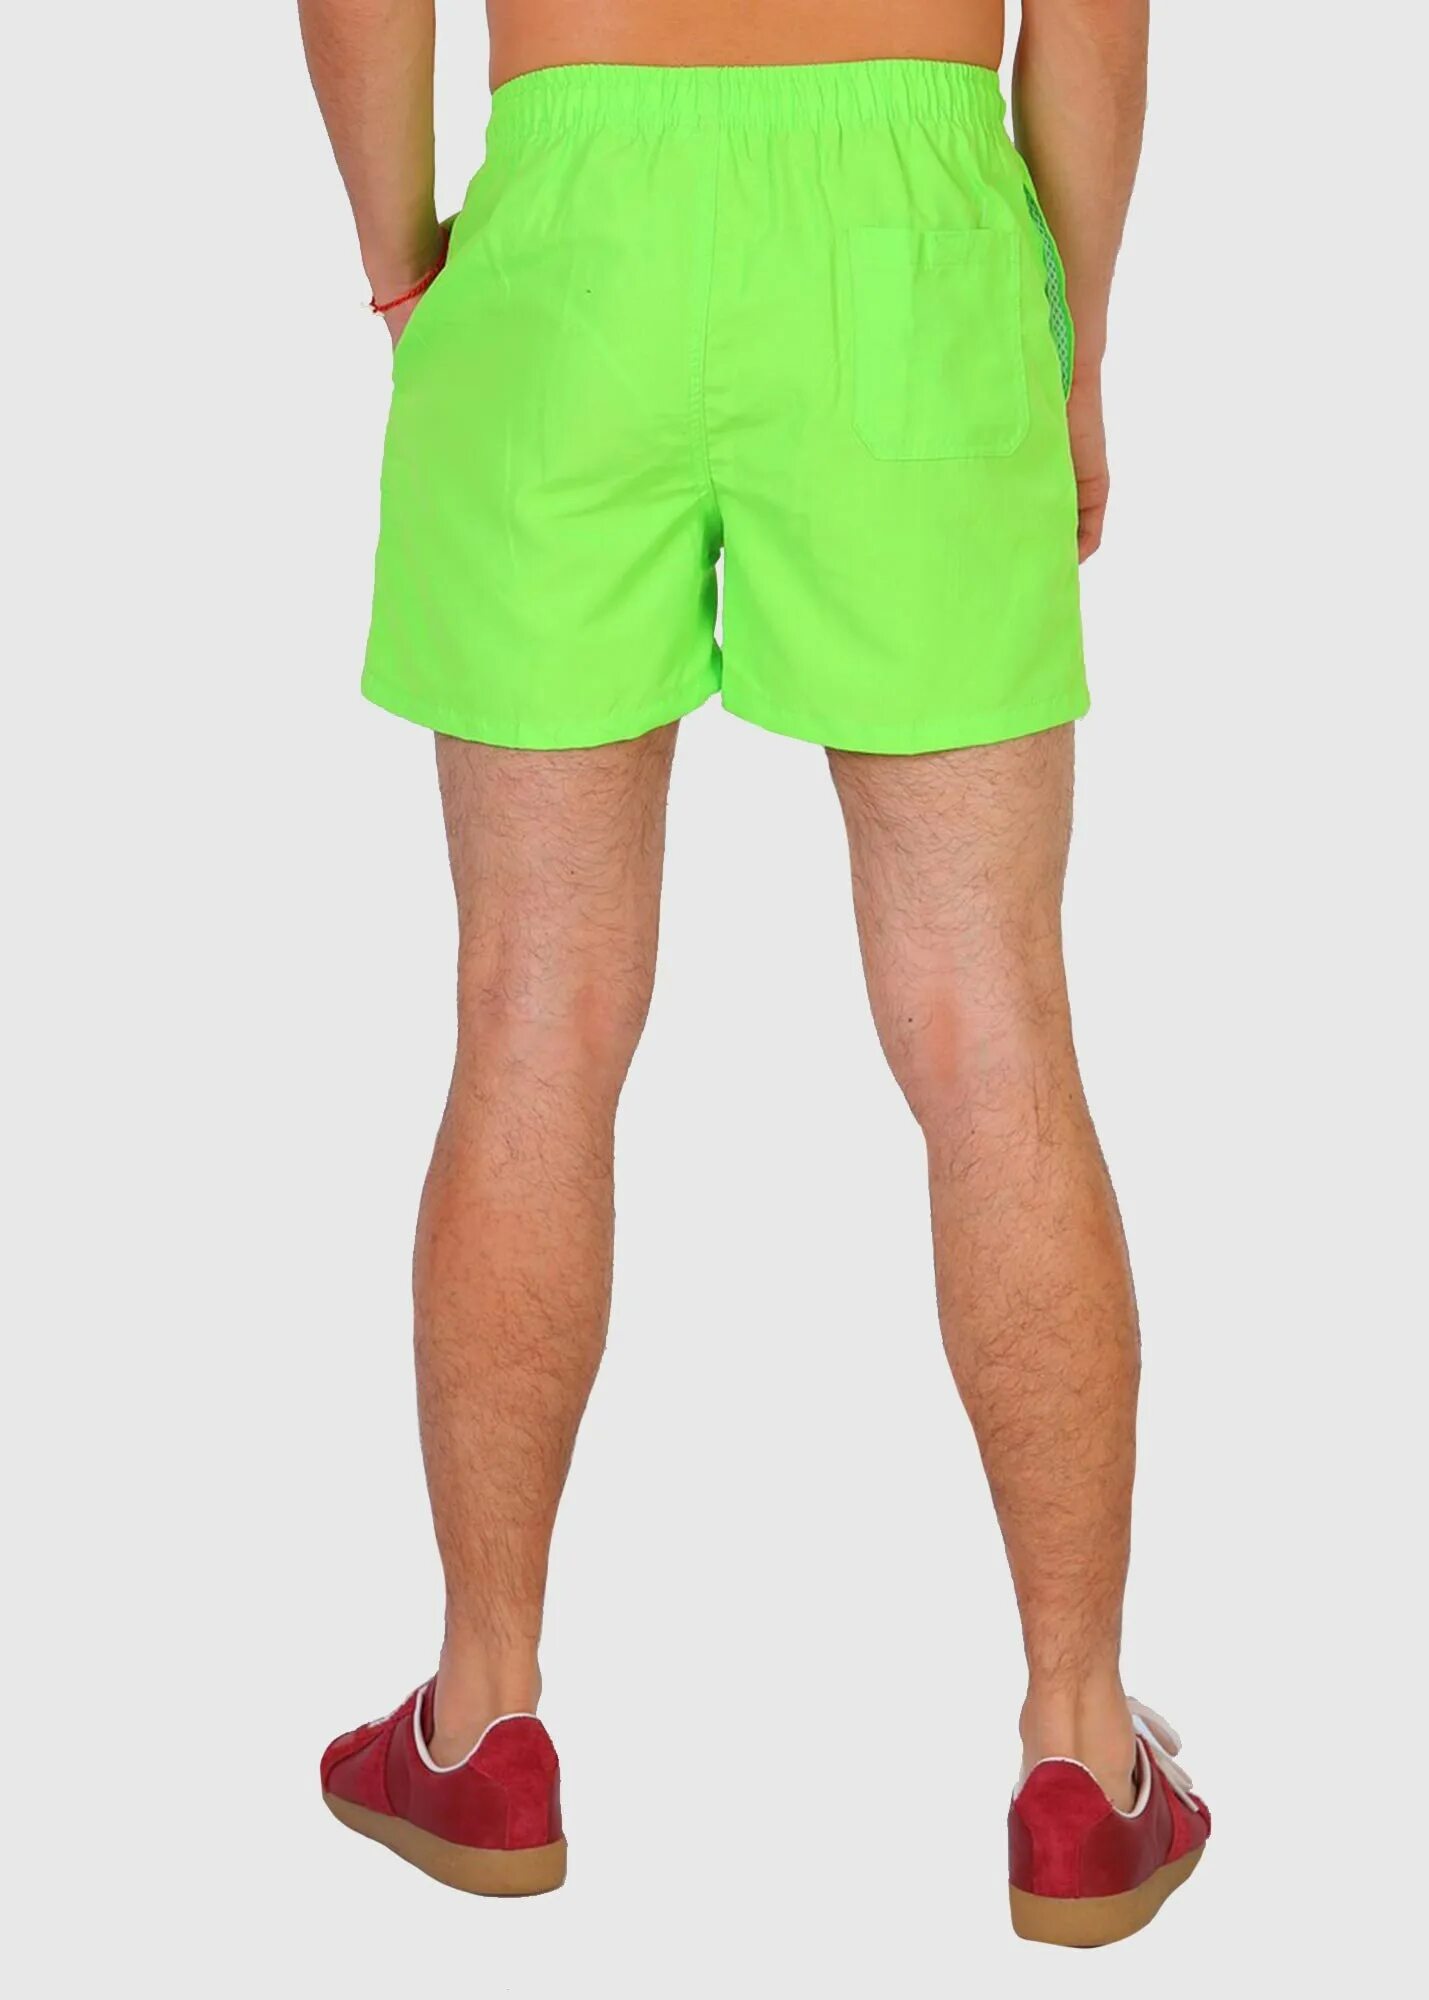 1990411-397 Шорты мужские hike™ short зеленый. Шорты адидас салатовые мужские. Puma XTG шорты мужские салатовый. Шорты Mexx зеленые салатовые.